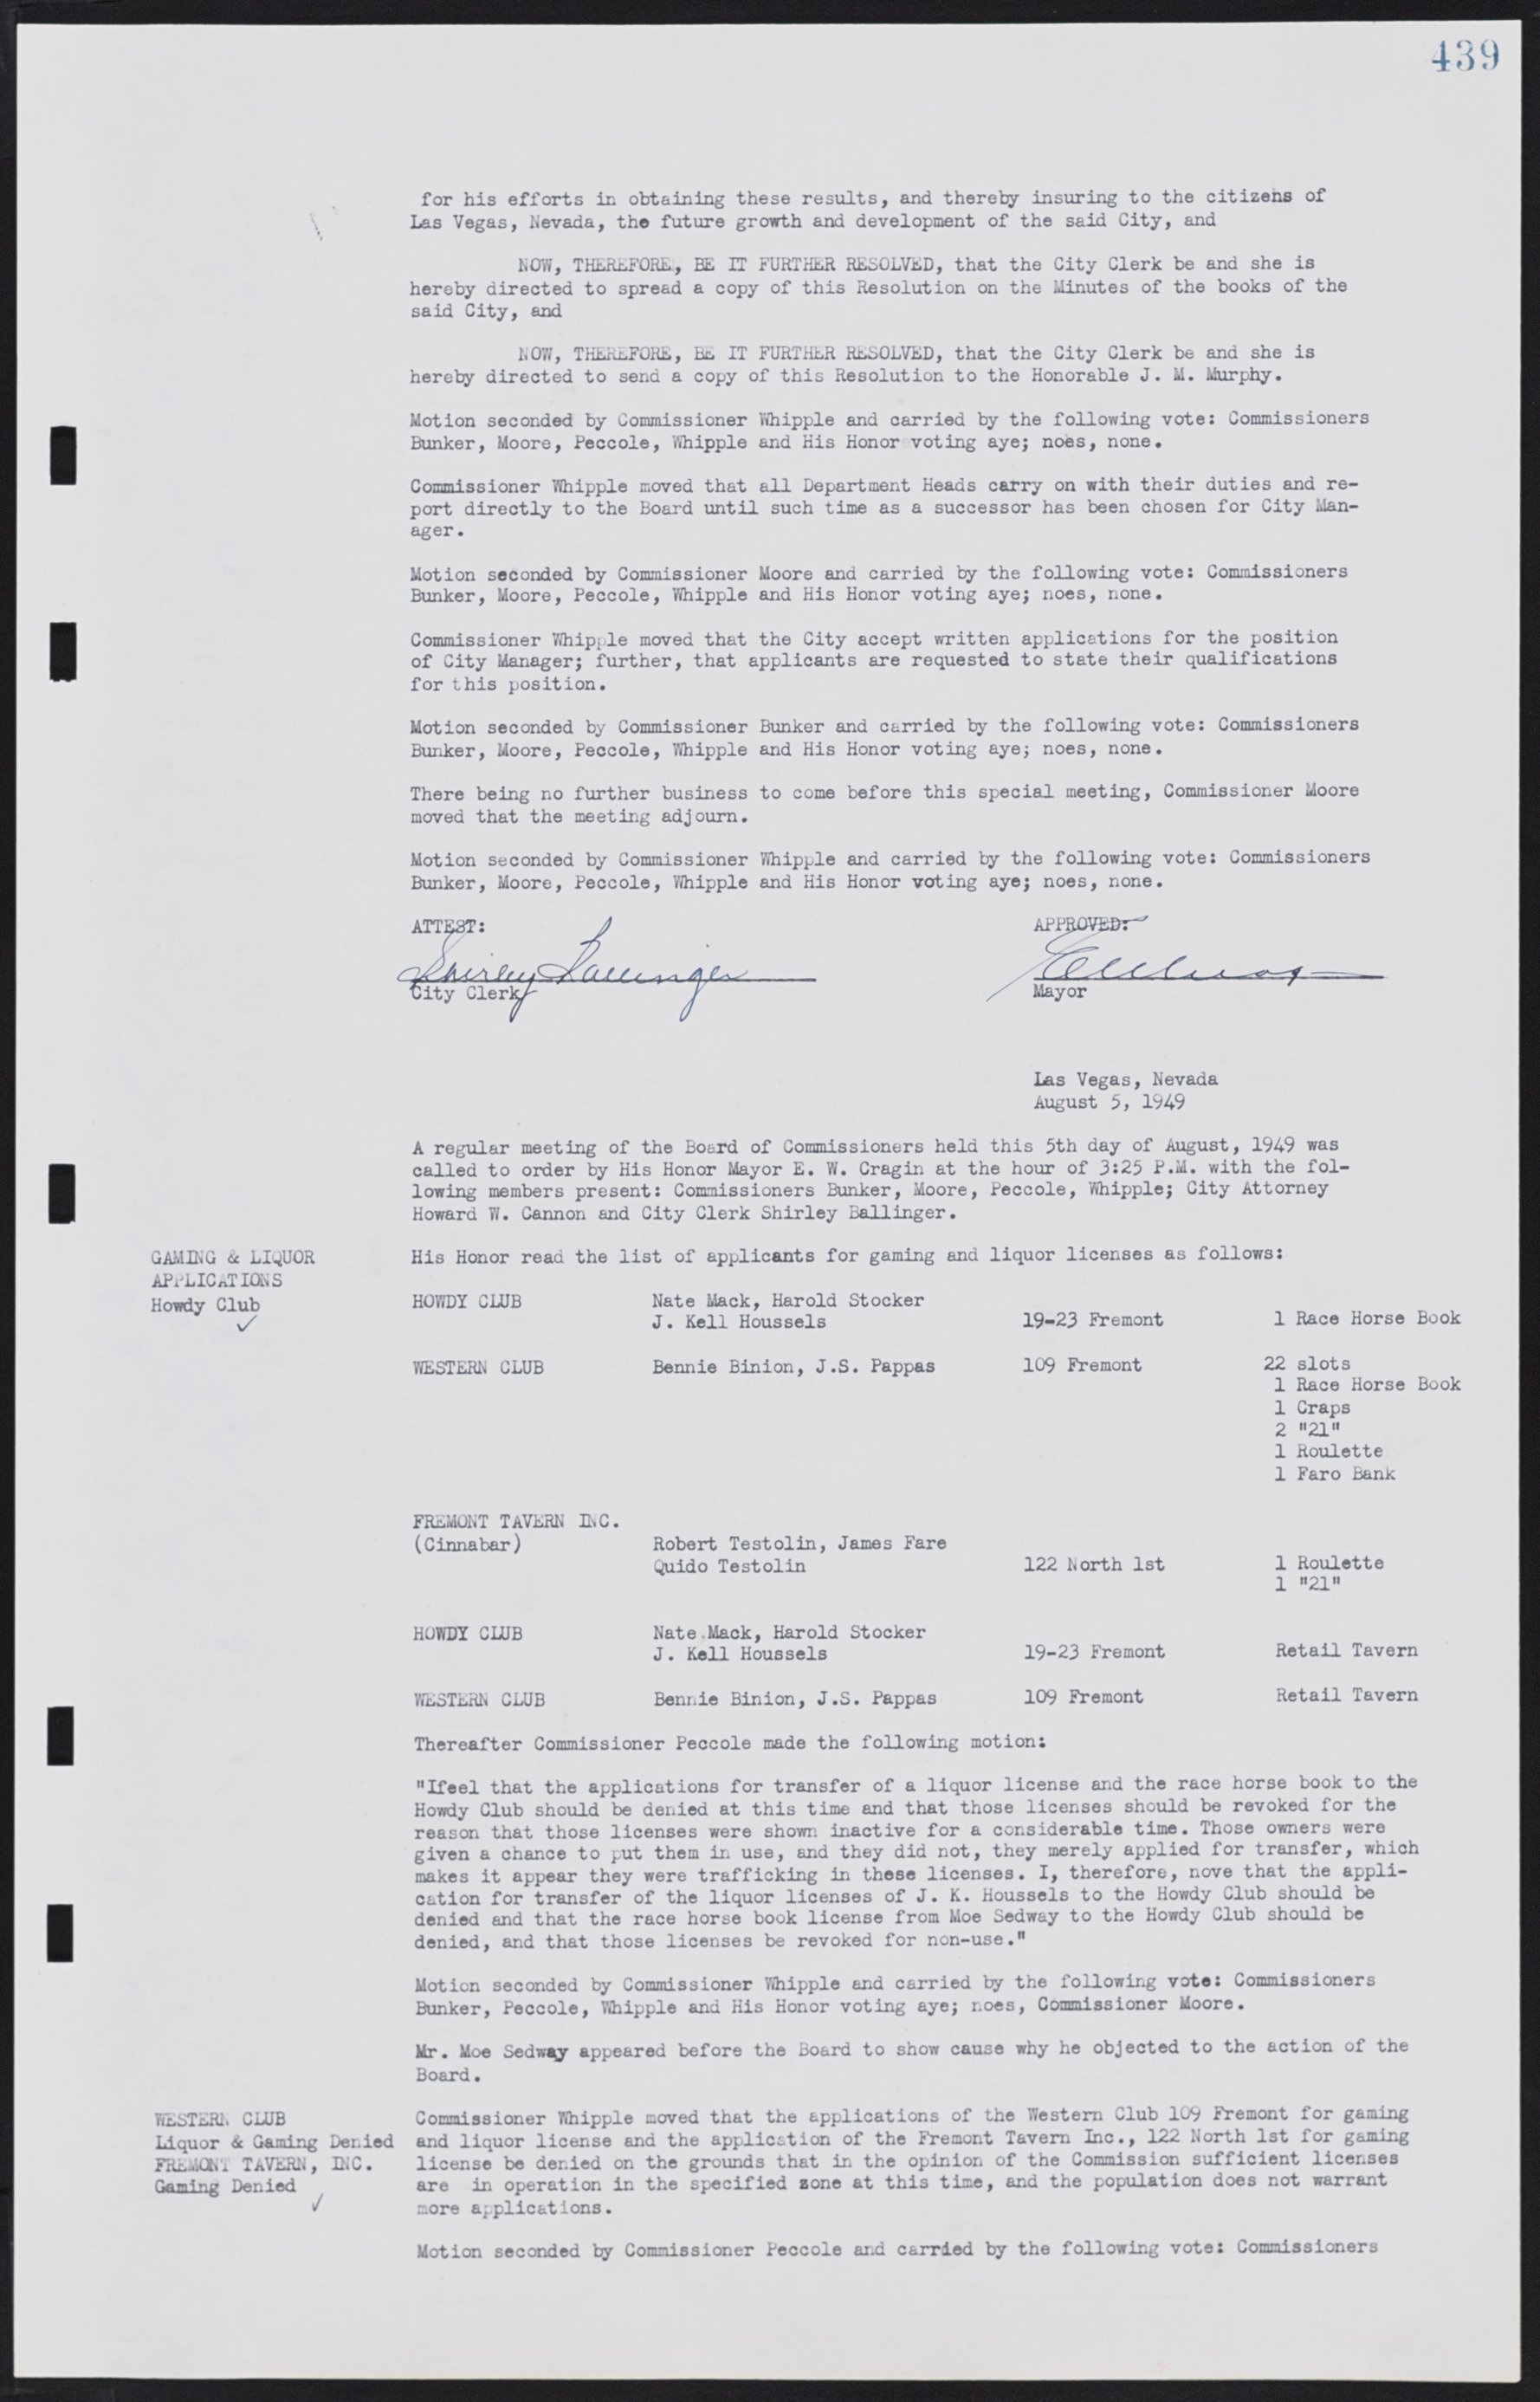 Las Vegas City Commission Minutes, January 7, 1947 to October 26, 1949, lvc000006-471